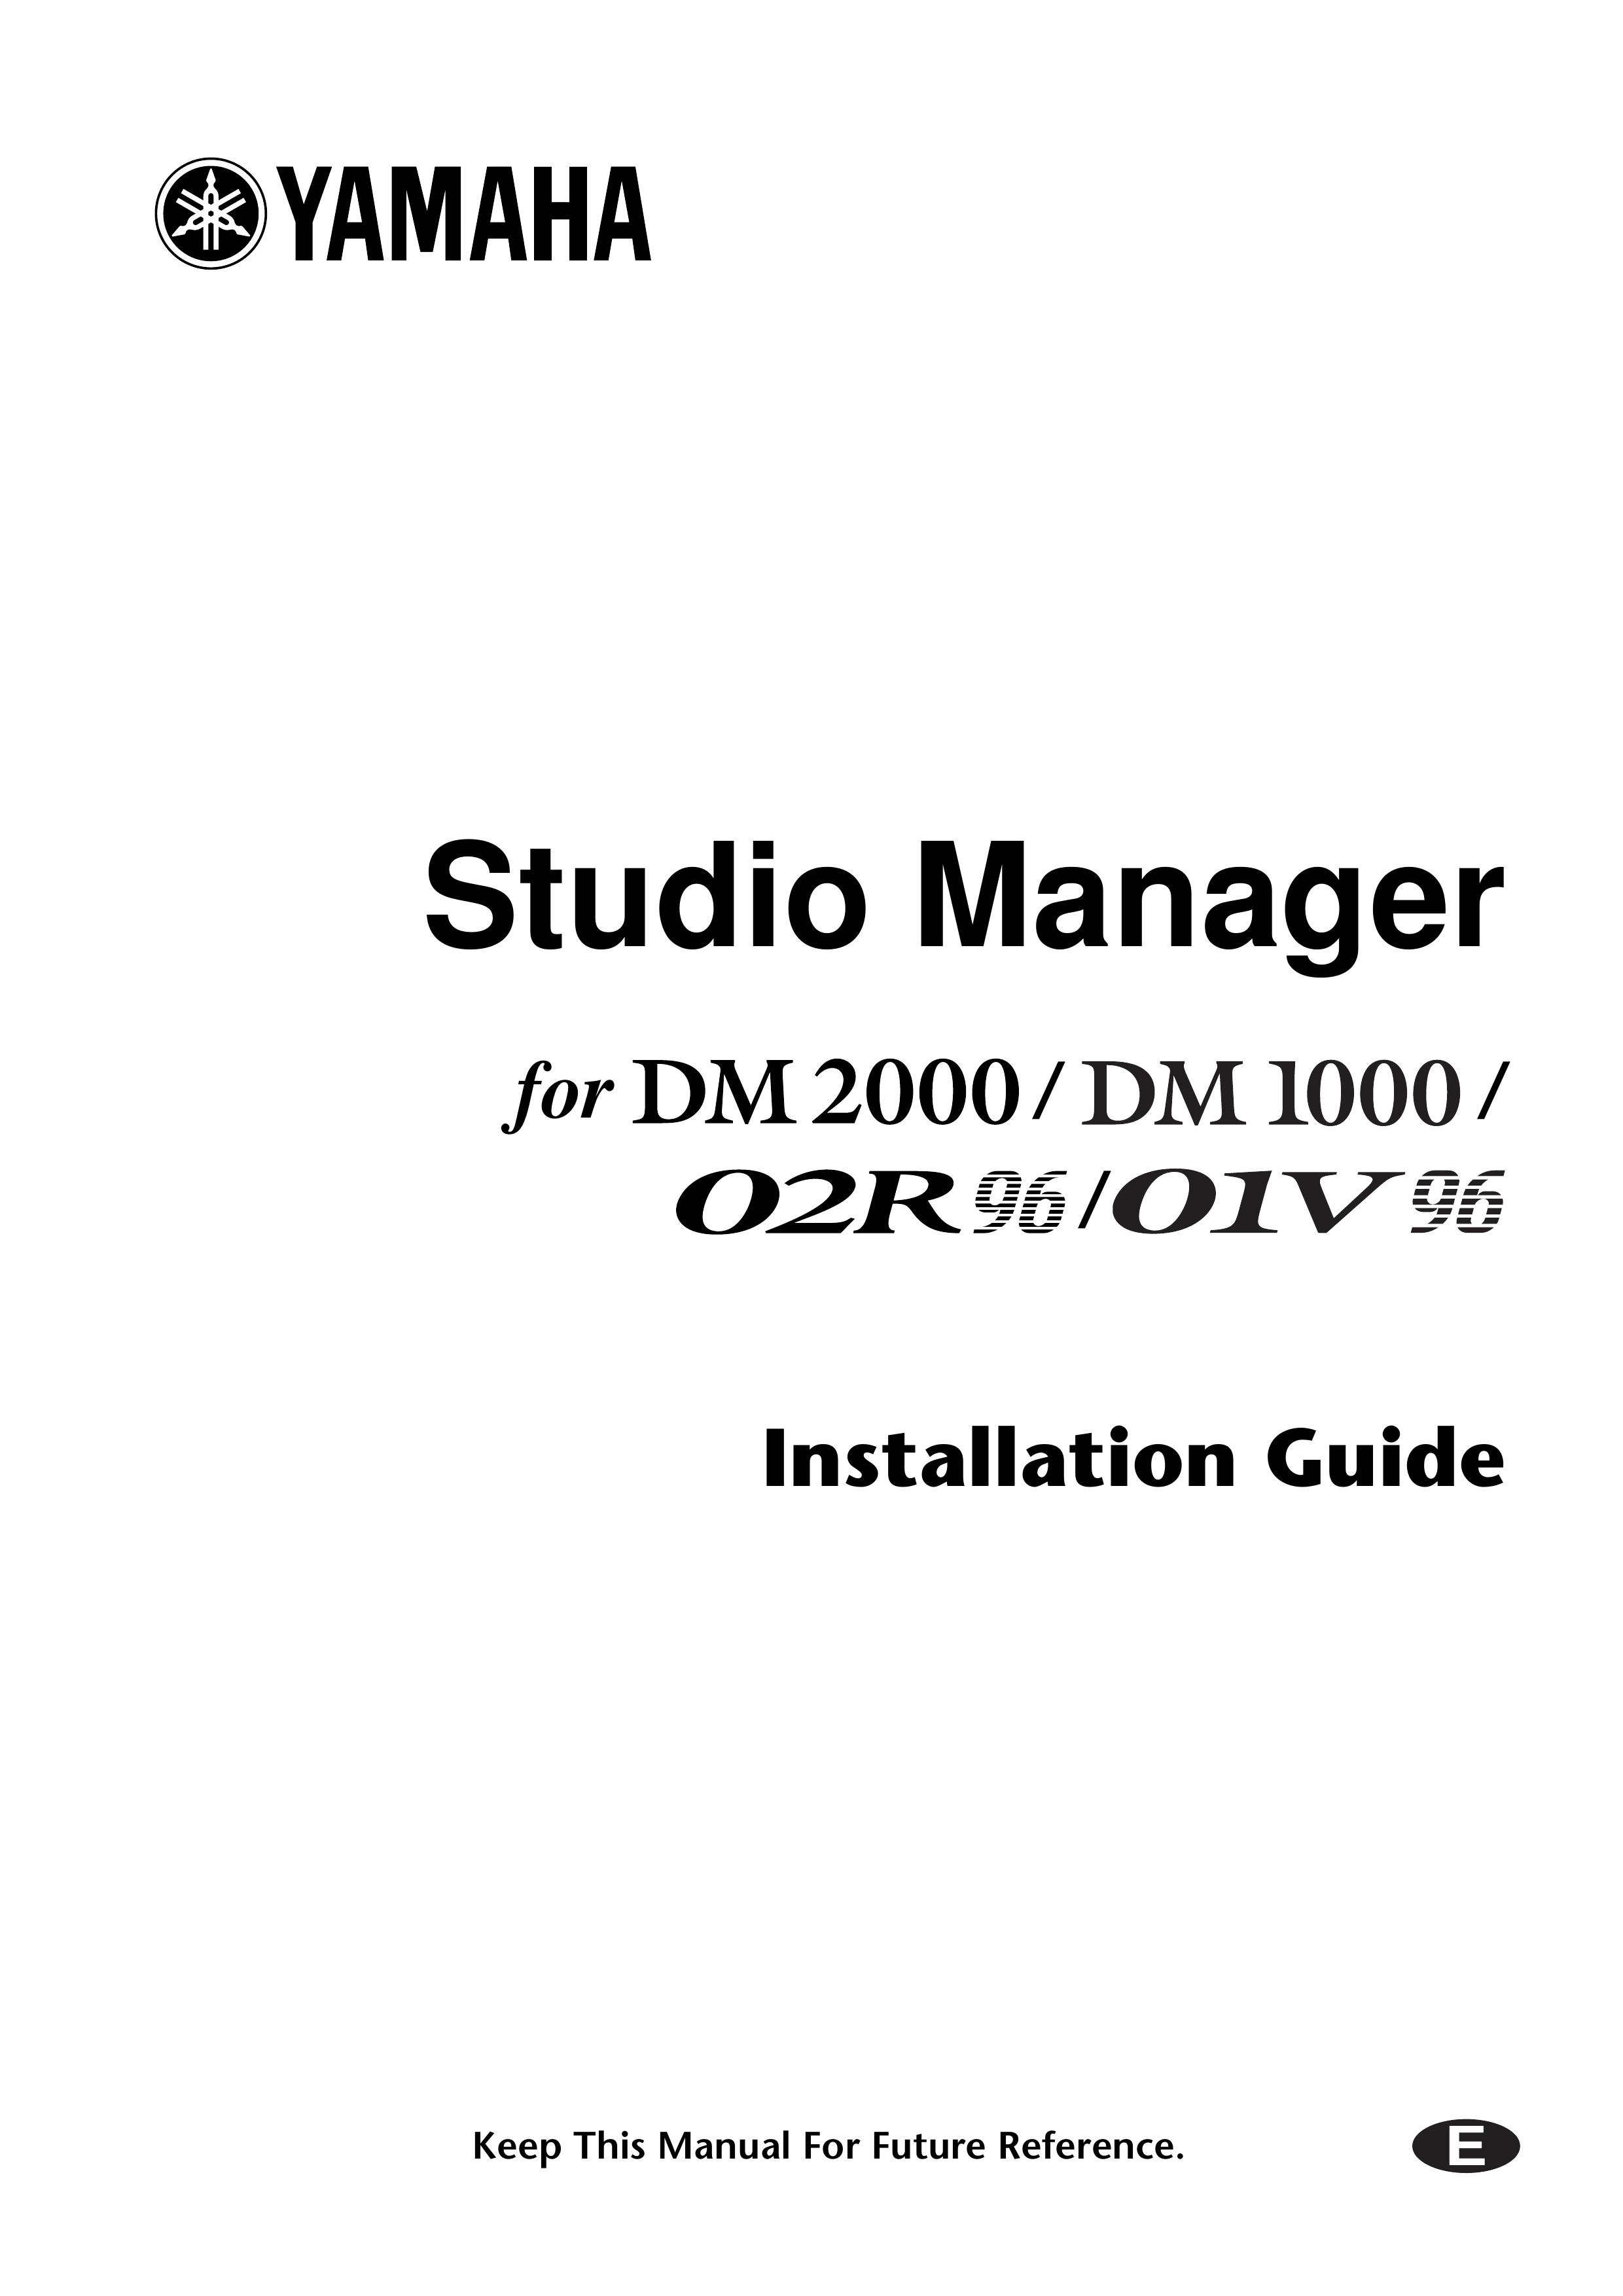 Yamaha DM2000 DJ Equipment User Manual